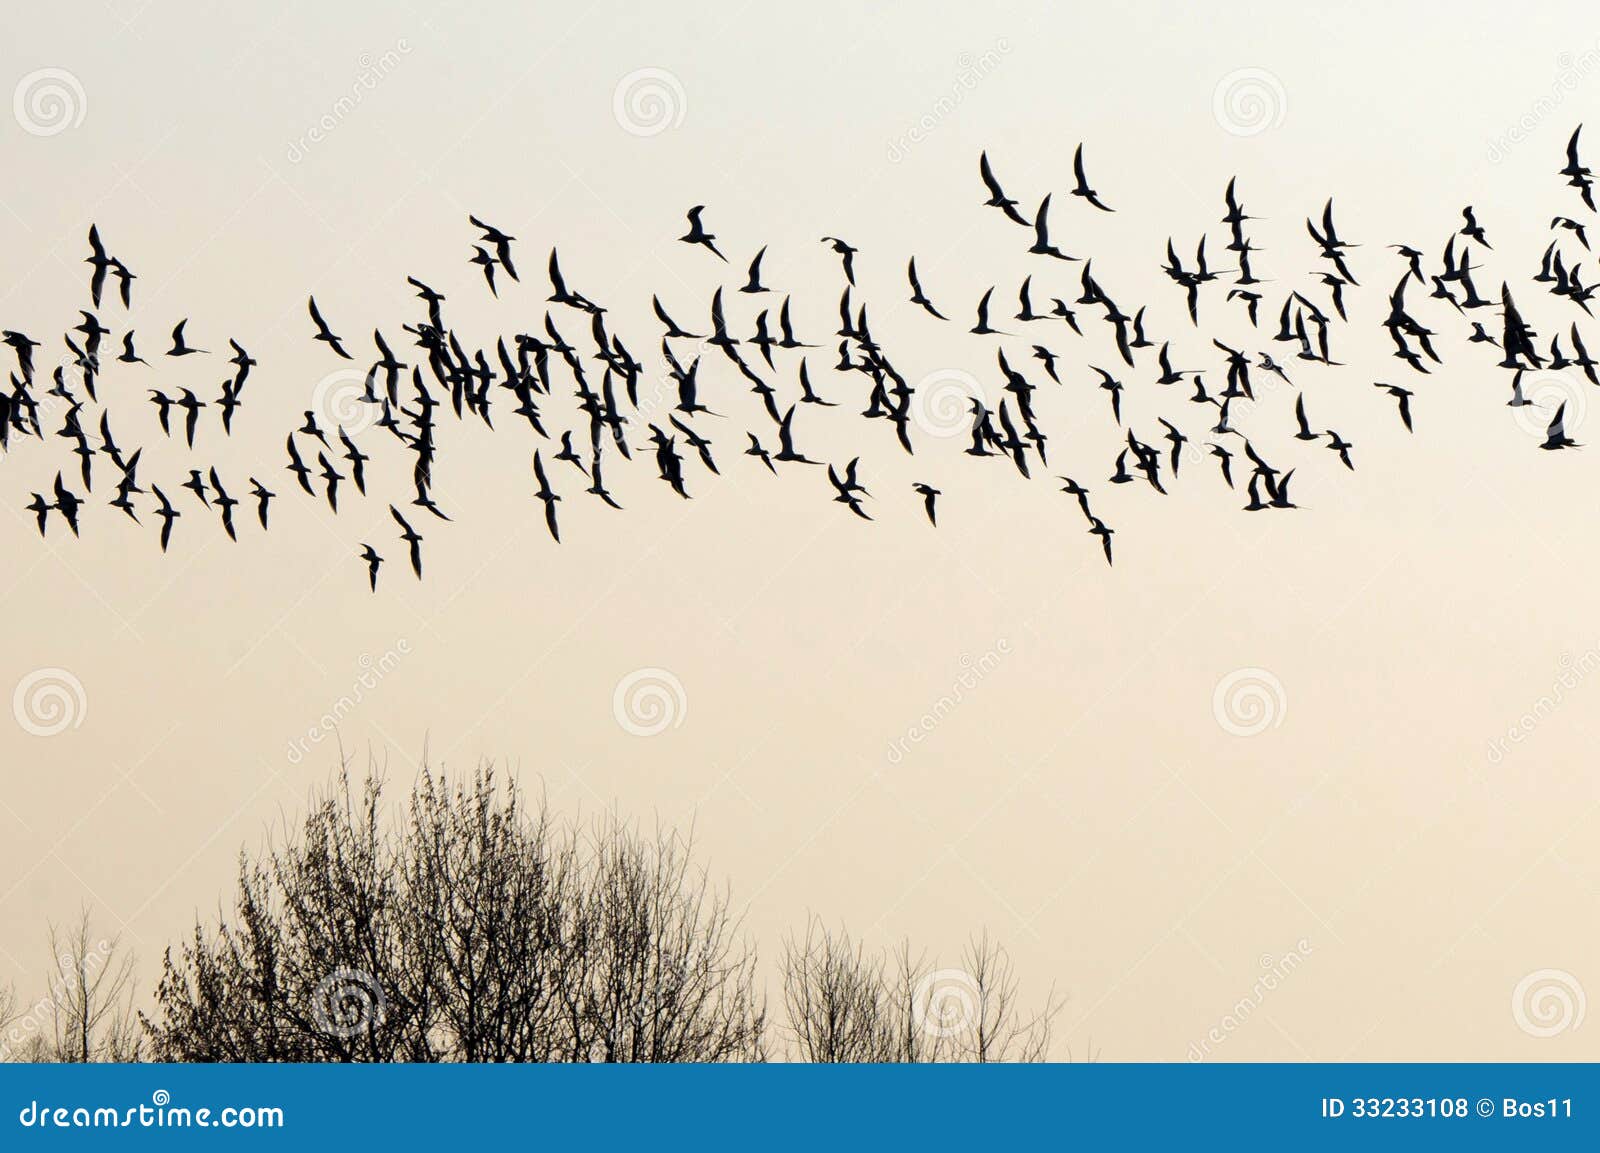 flock of birds migrating south.